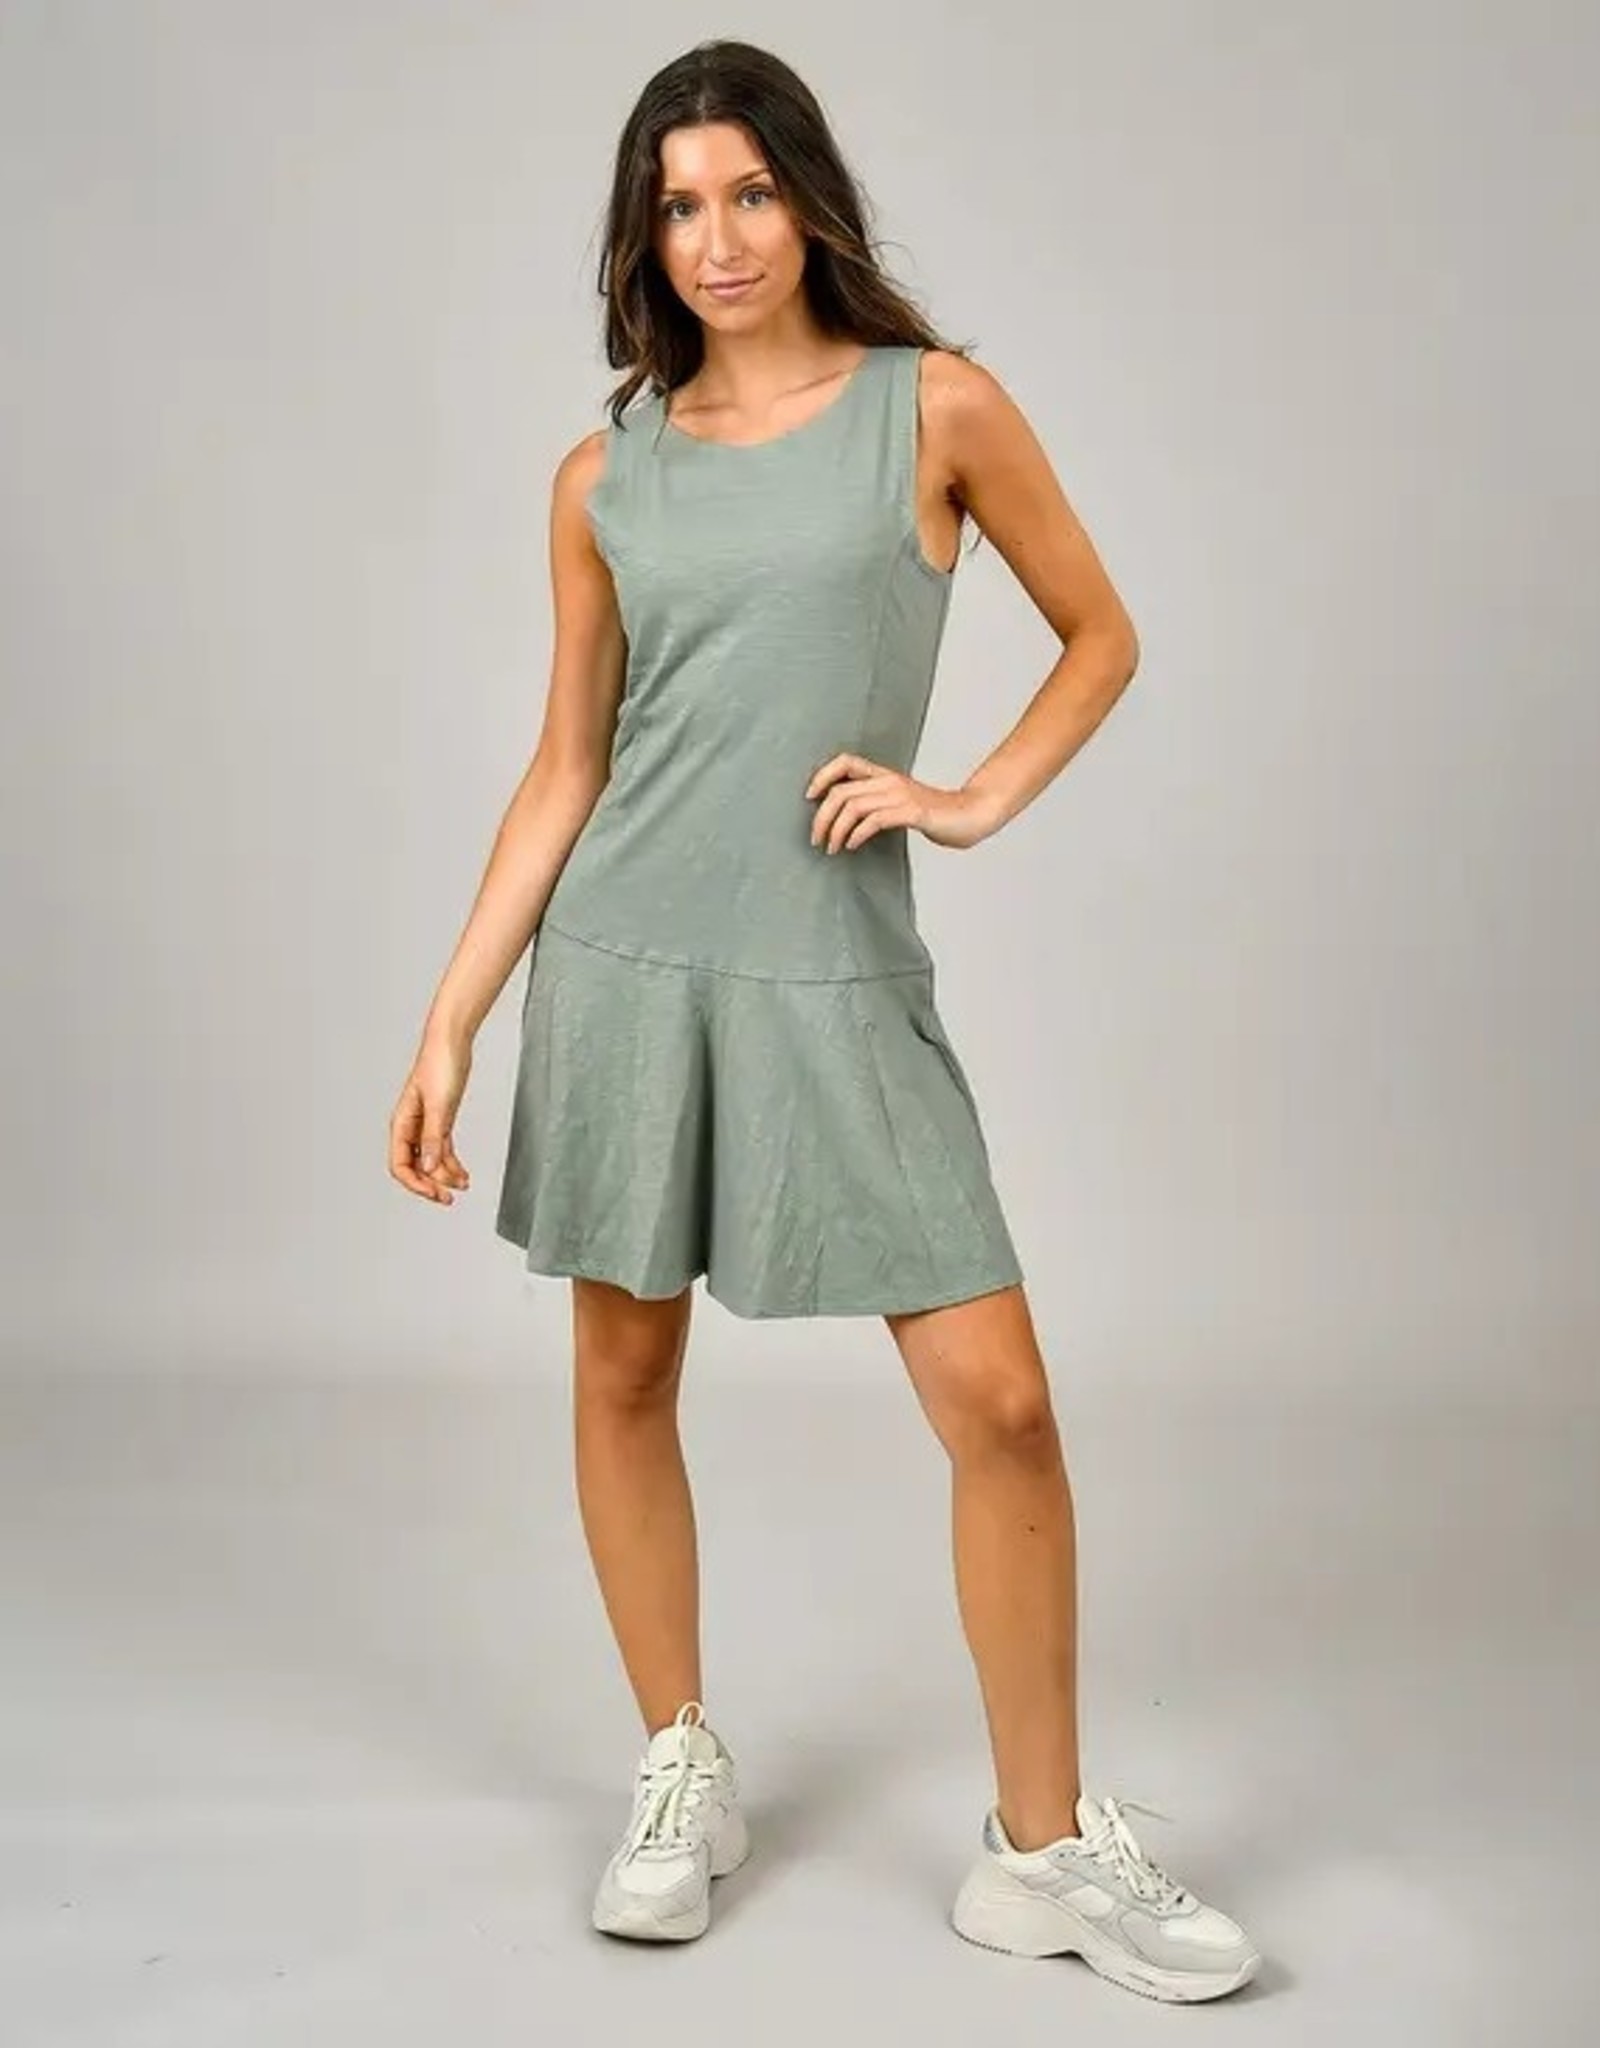 RD Style Tenna Tennis Sleeveless Dress